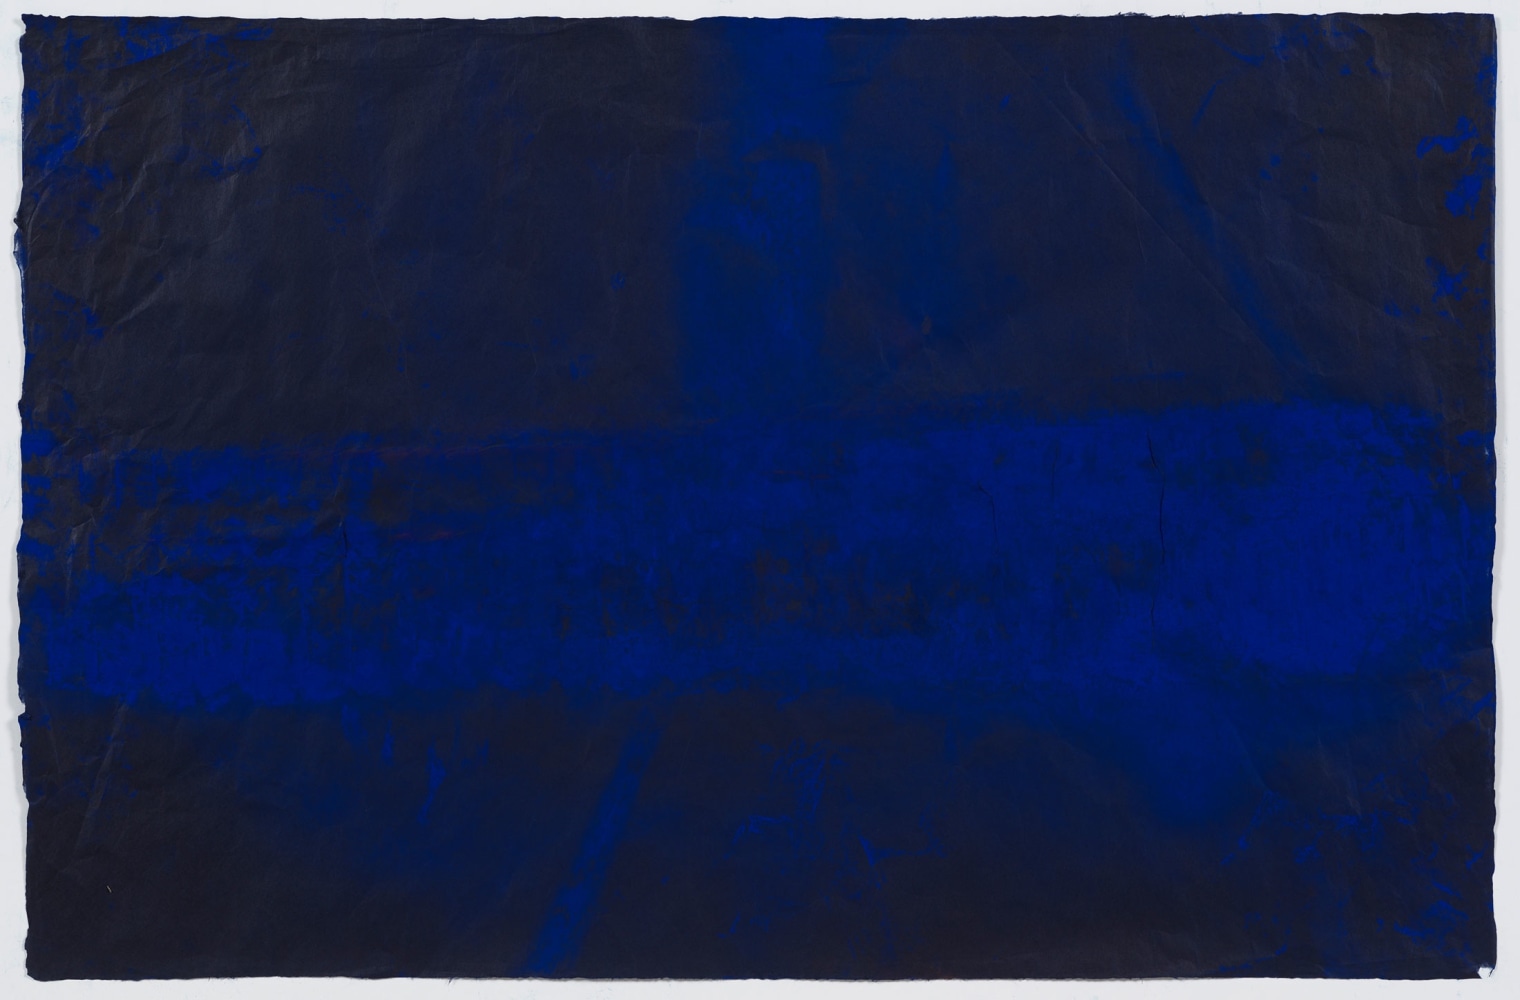 Jason Moran
Blue Calamintha, 2020
Pigment on Indigo dyed Gampi paper
25 x 38 1/4 inches
(63.5 x 97.2 cm)